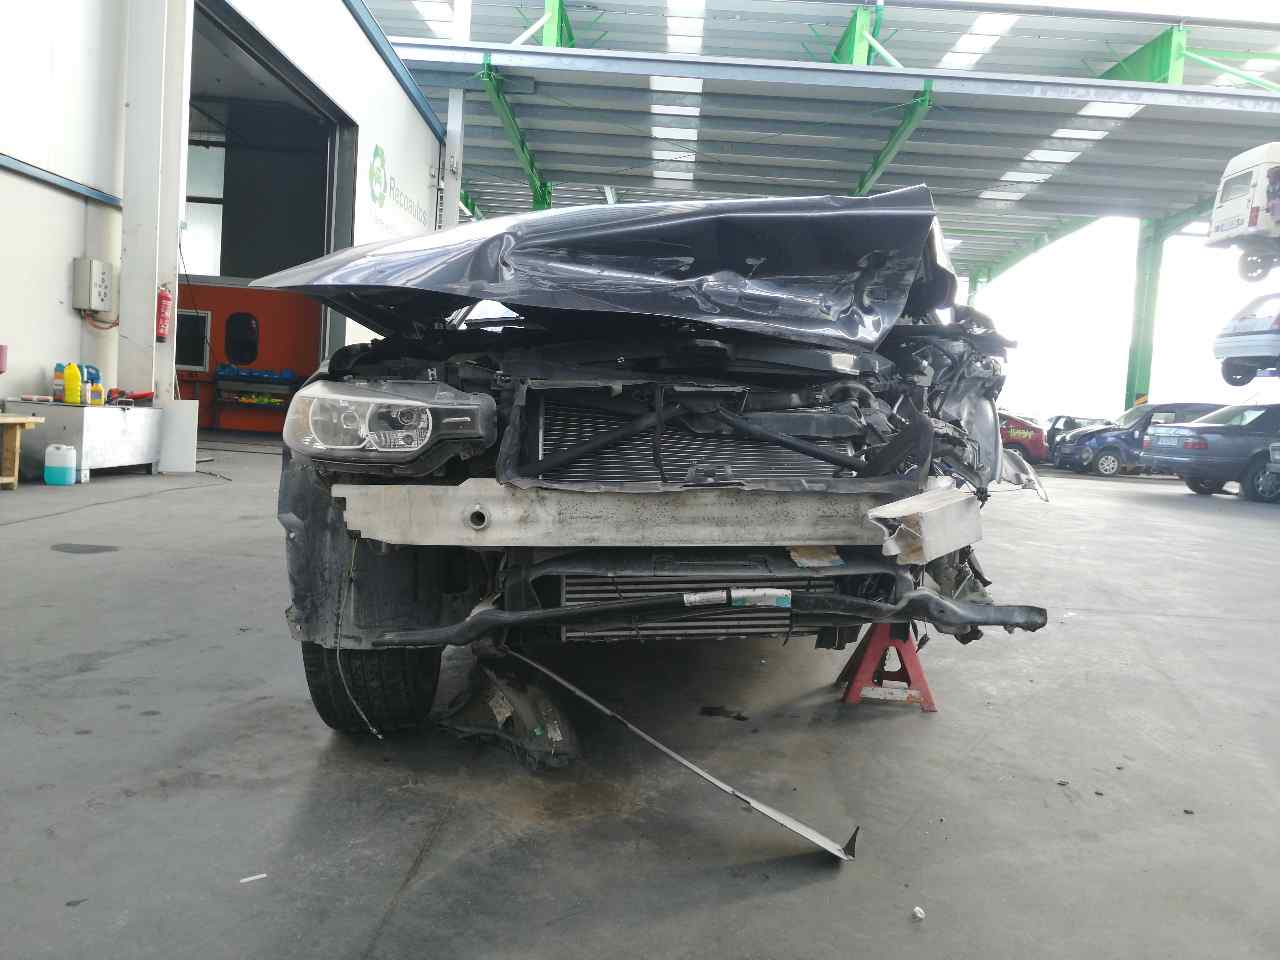 BMW 3 Series F30/F31 (2011-2020) Ratlankis (ratas) 6796247, R188JX18H2IS34, ALUMINIO10P 24534310